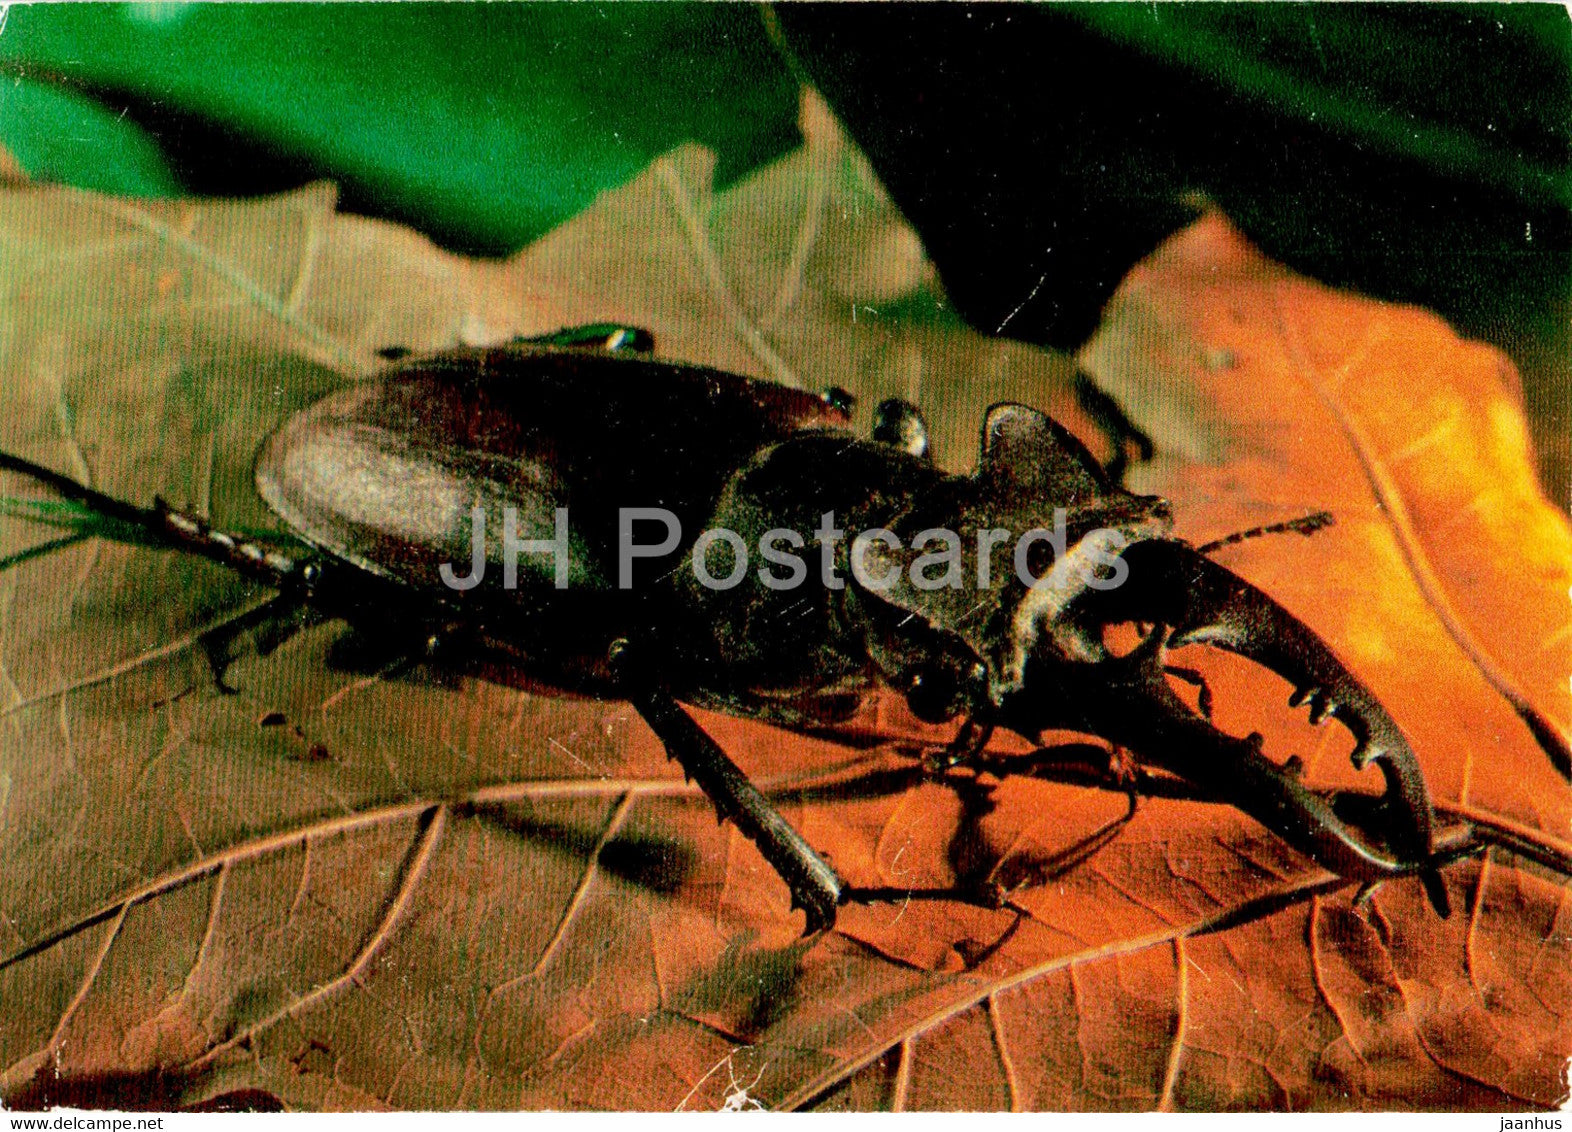 Miyama stag beetle - Lucanus maculifemoratus - insects - 1977 - Russia USSR - unused - JH Postcards